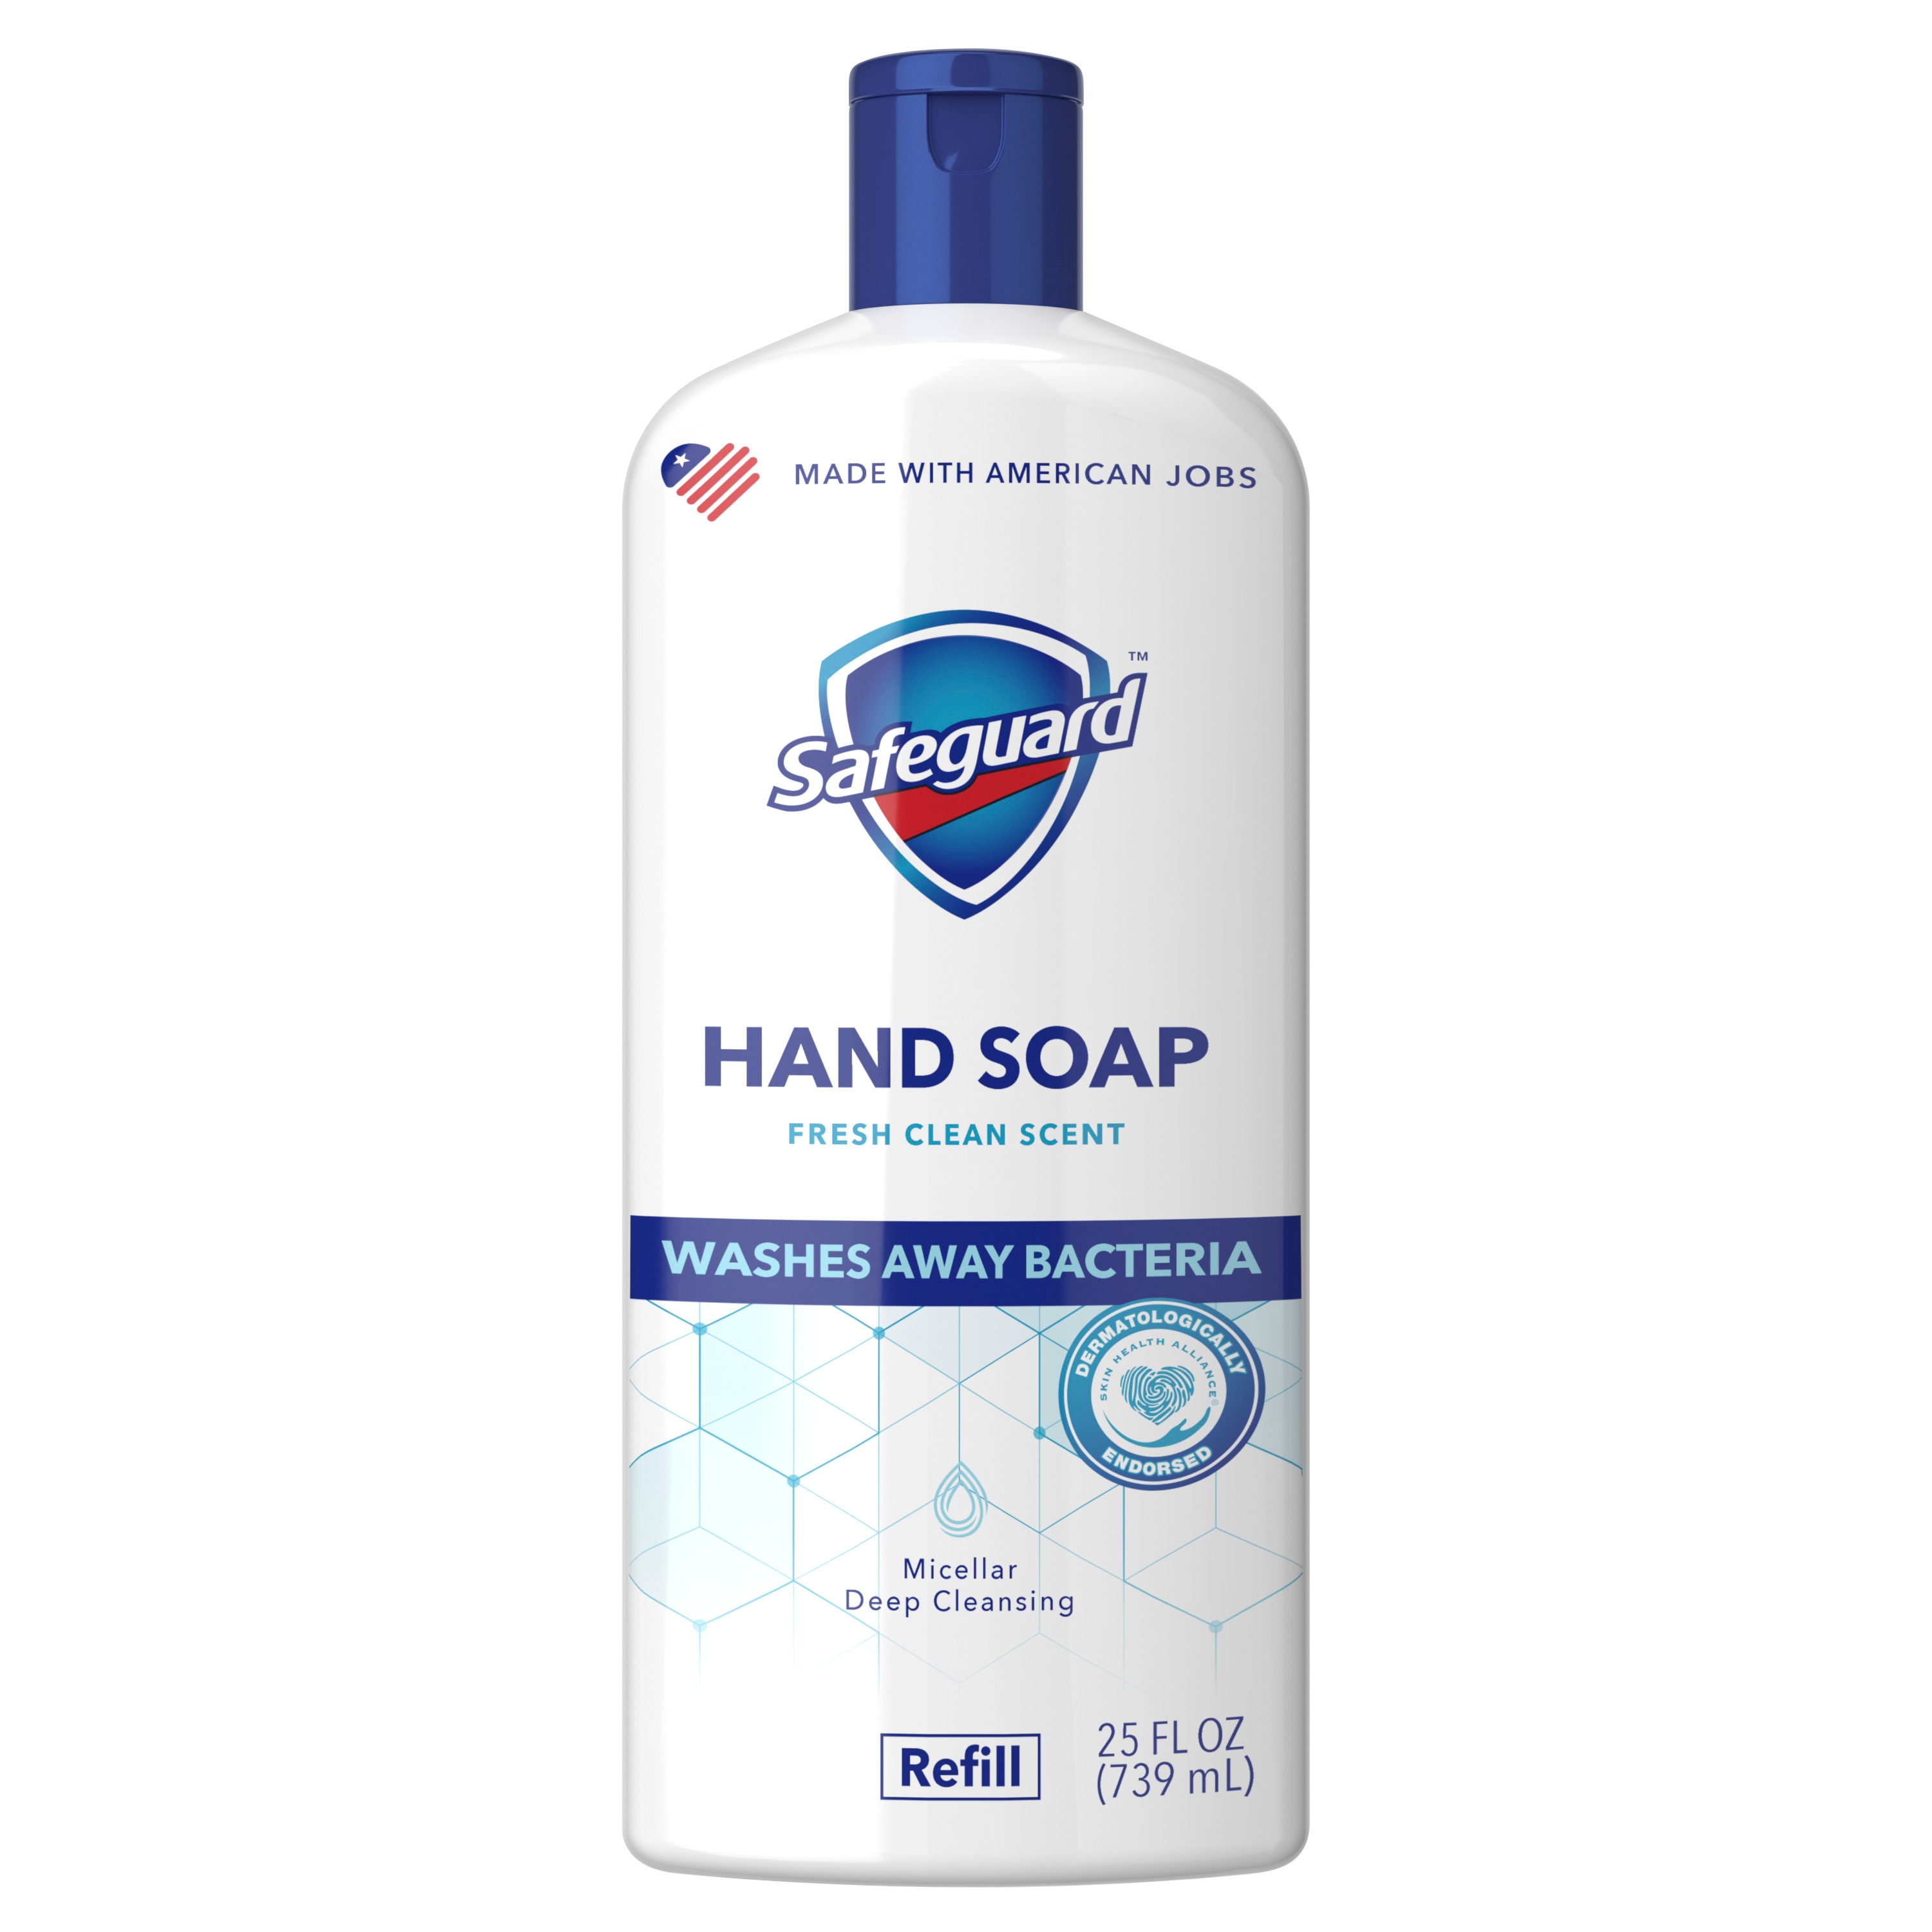 Softsoap Advanced Clean Liquid Hand Soap Refill 80 oz, 2-pack